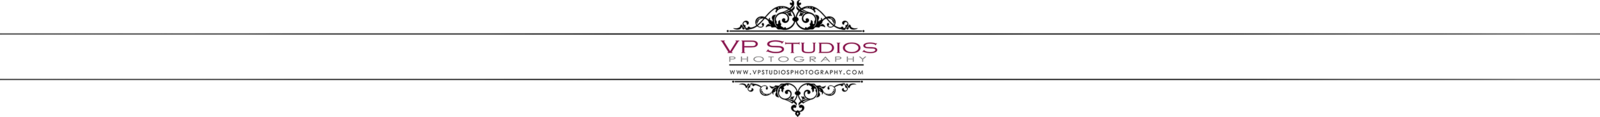 VP Studios - Logo_Large_WEB